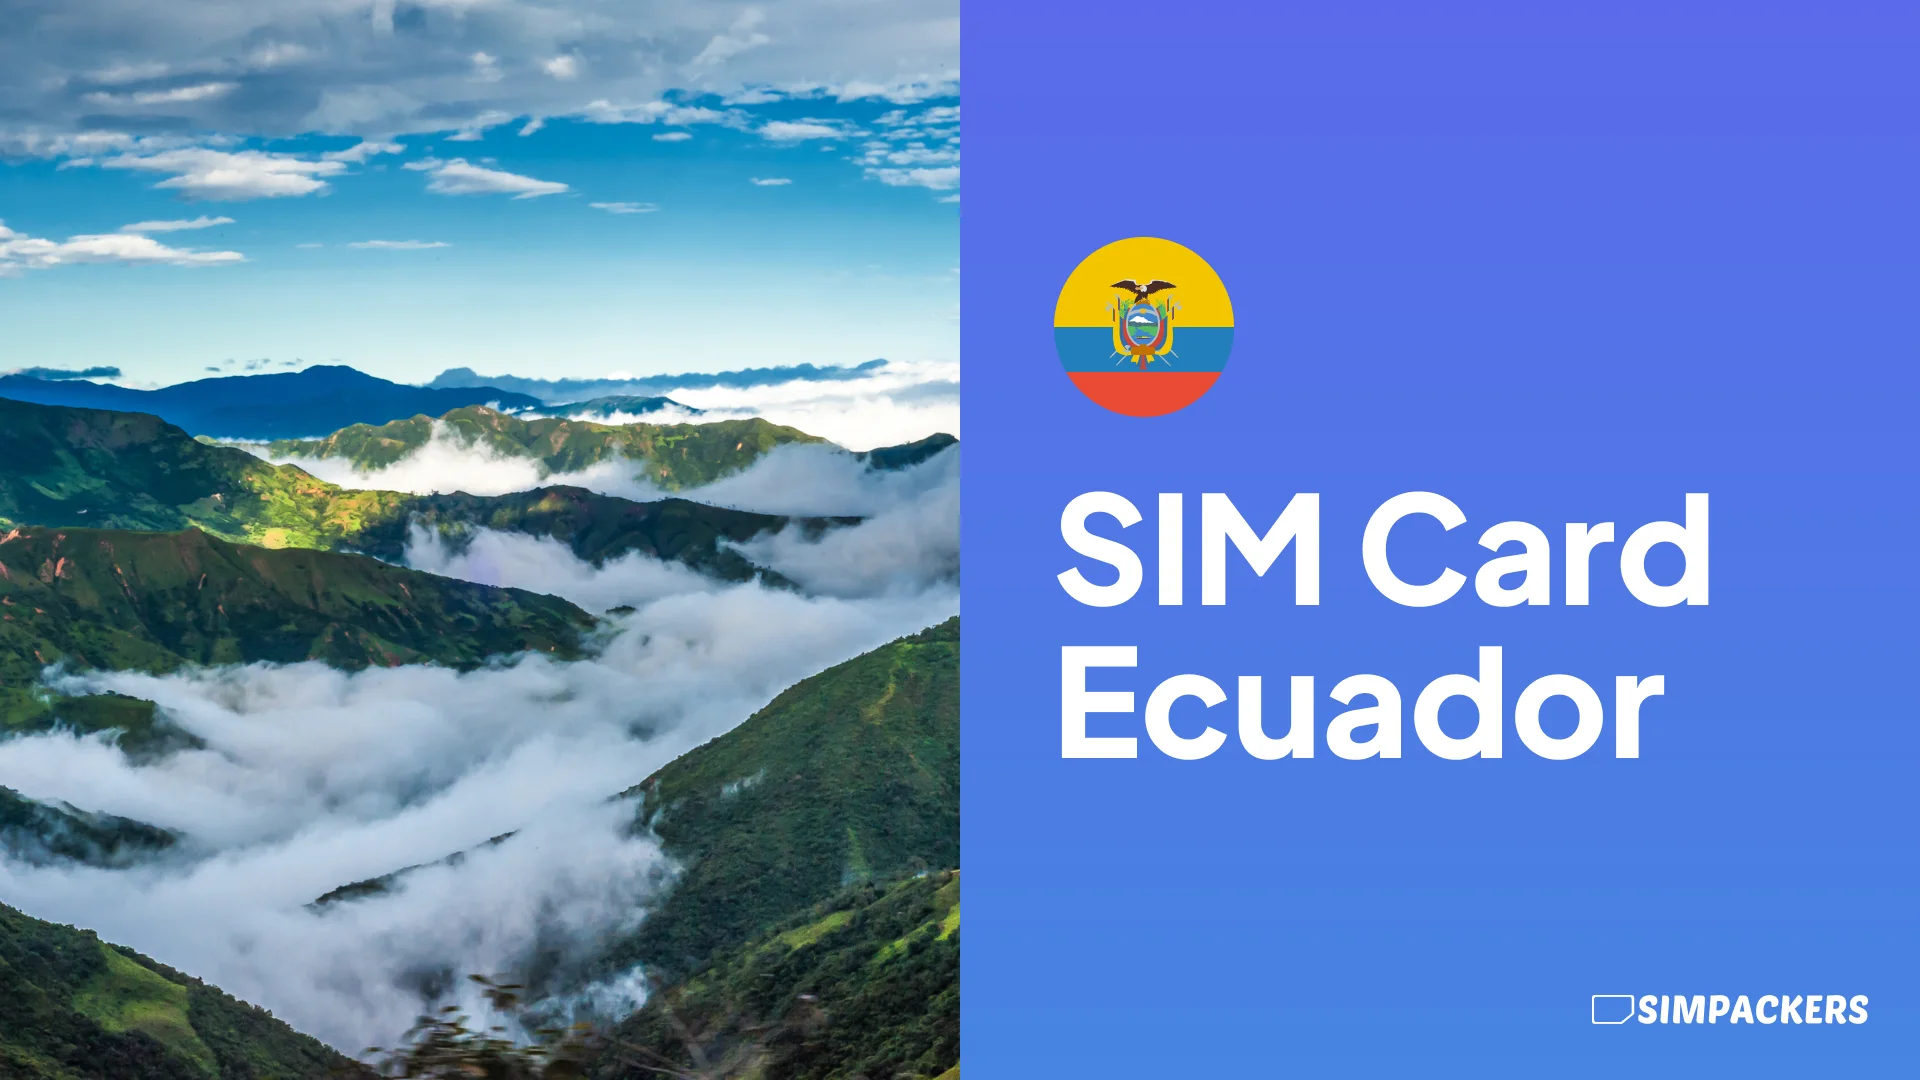 EN/FEATURED_IMAGES/sim-card-ecuador.webp